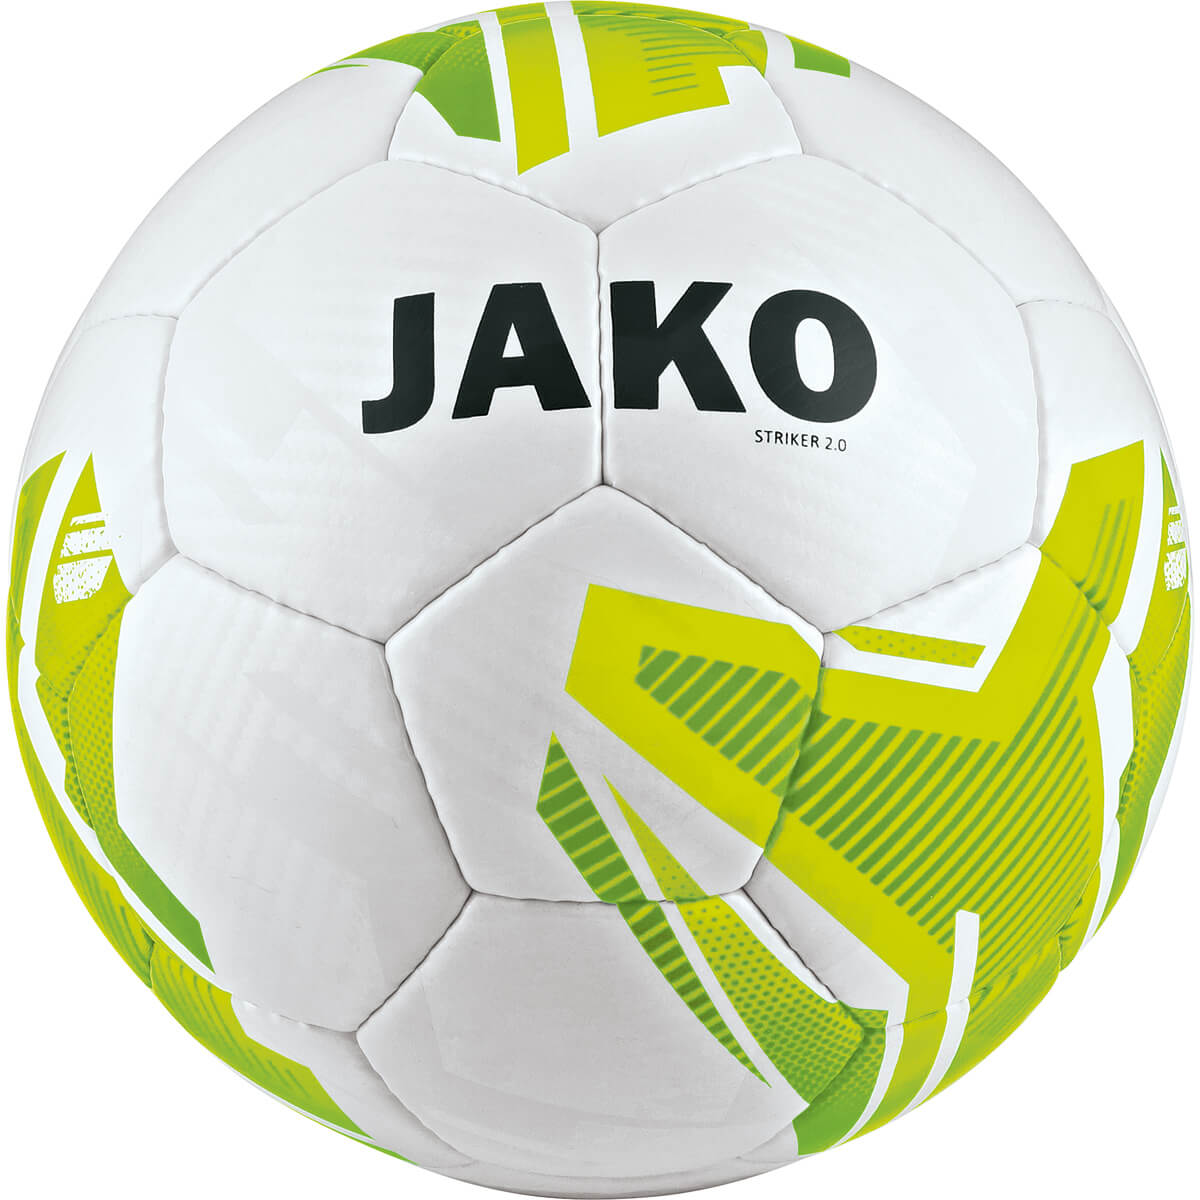 JAKO 2353-31 Ballon Entraînement Striker 2.0 Blanc/Jaune Néon/Vert